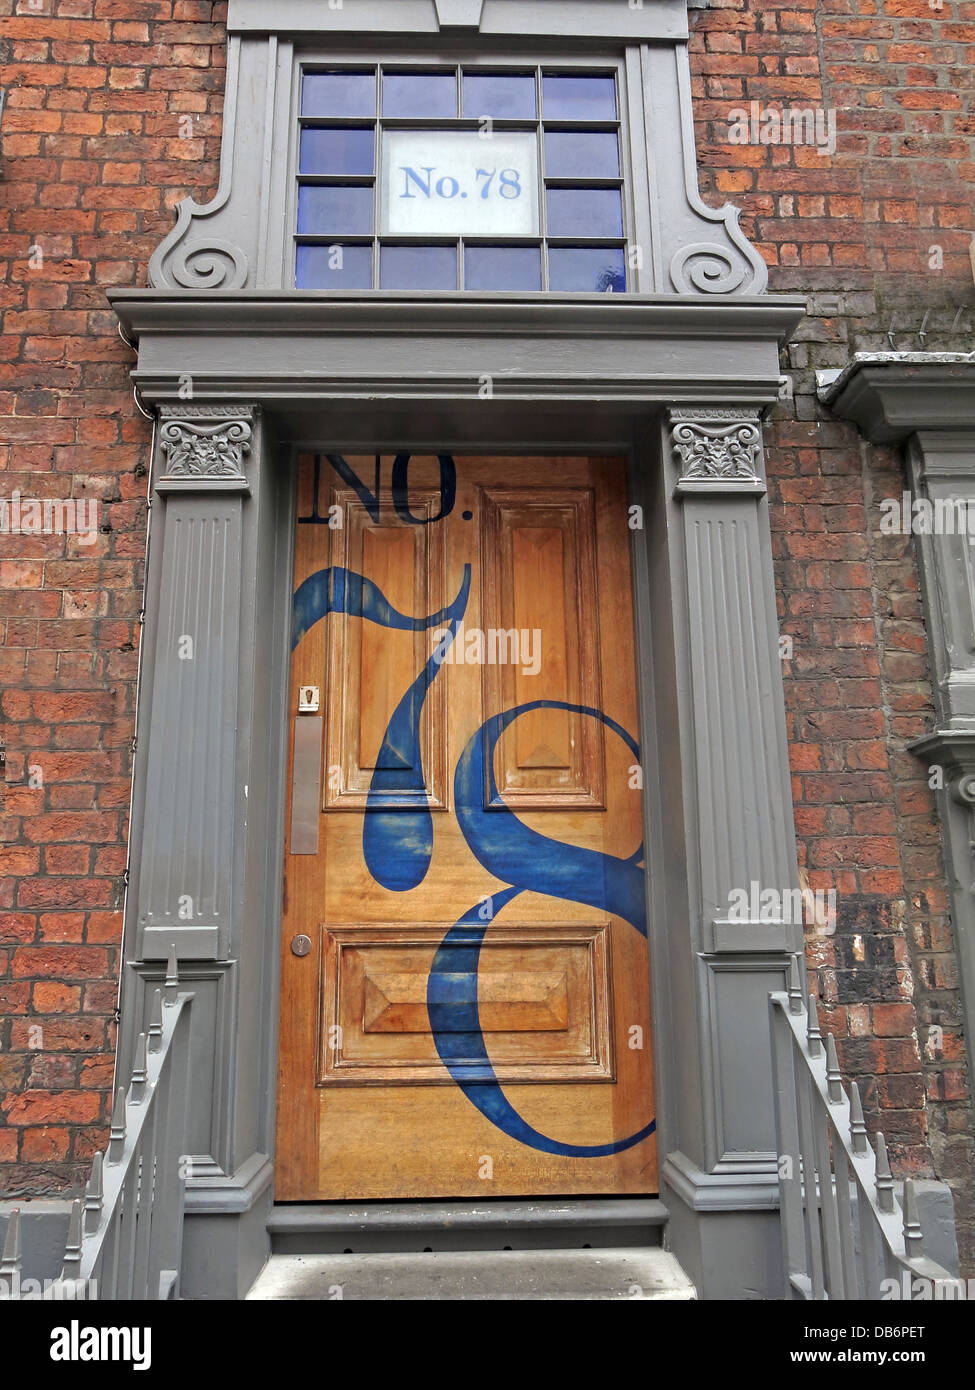 BrooklynMixer SeventyEight, 78, a doorway in Seel Street, Liverpool, Merseyside, England, UK, L1 4BH Stock Photo